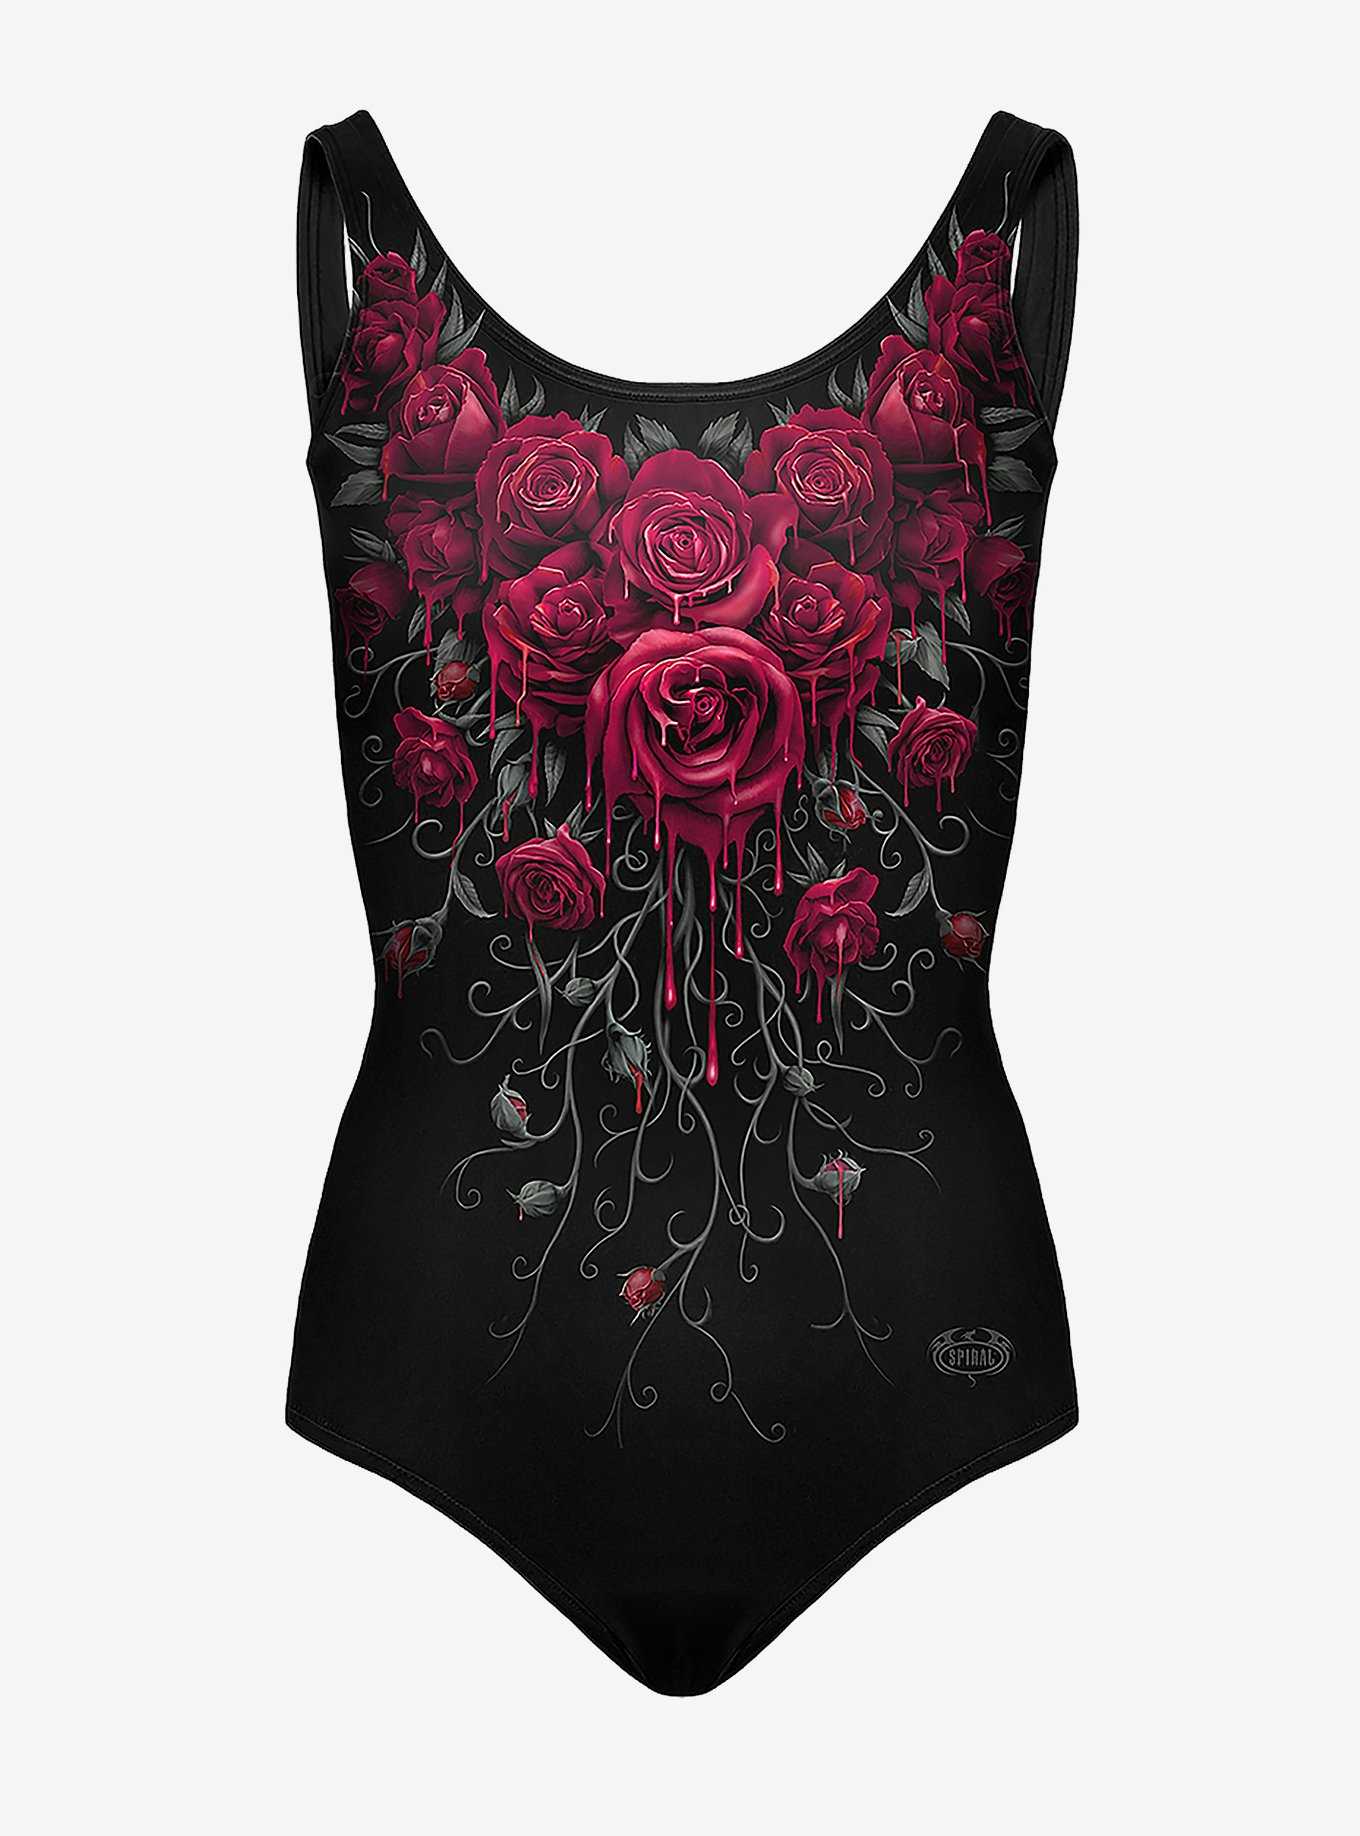 Dark Roses Scoop Back Swimsuit, , hi-res